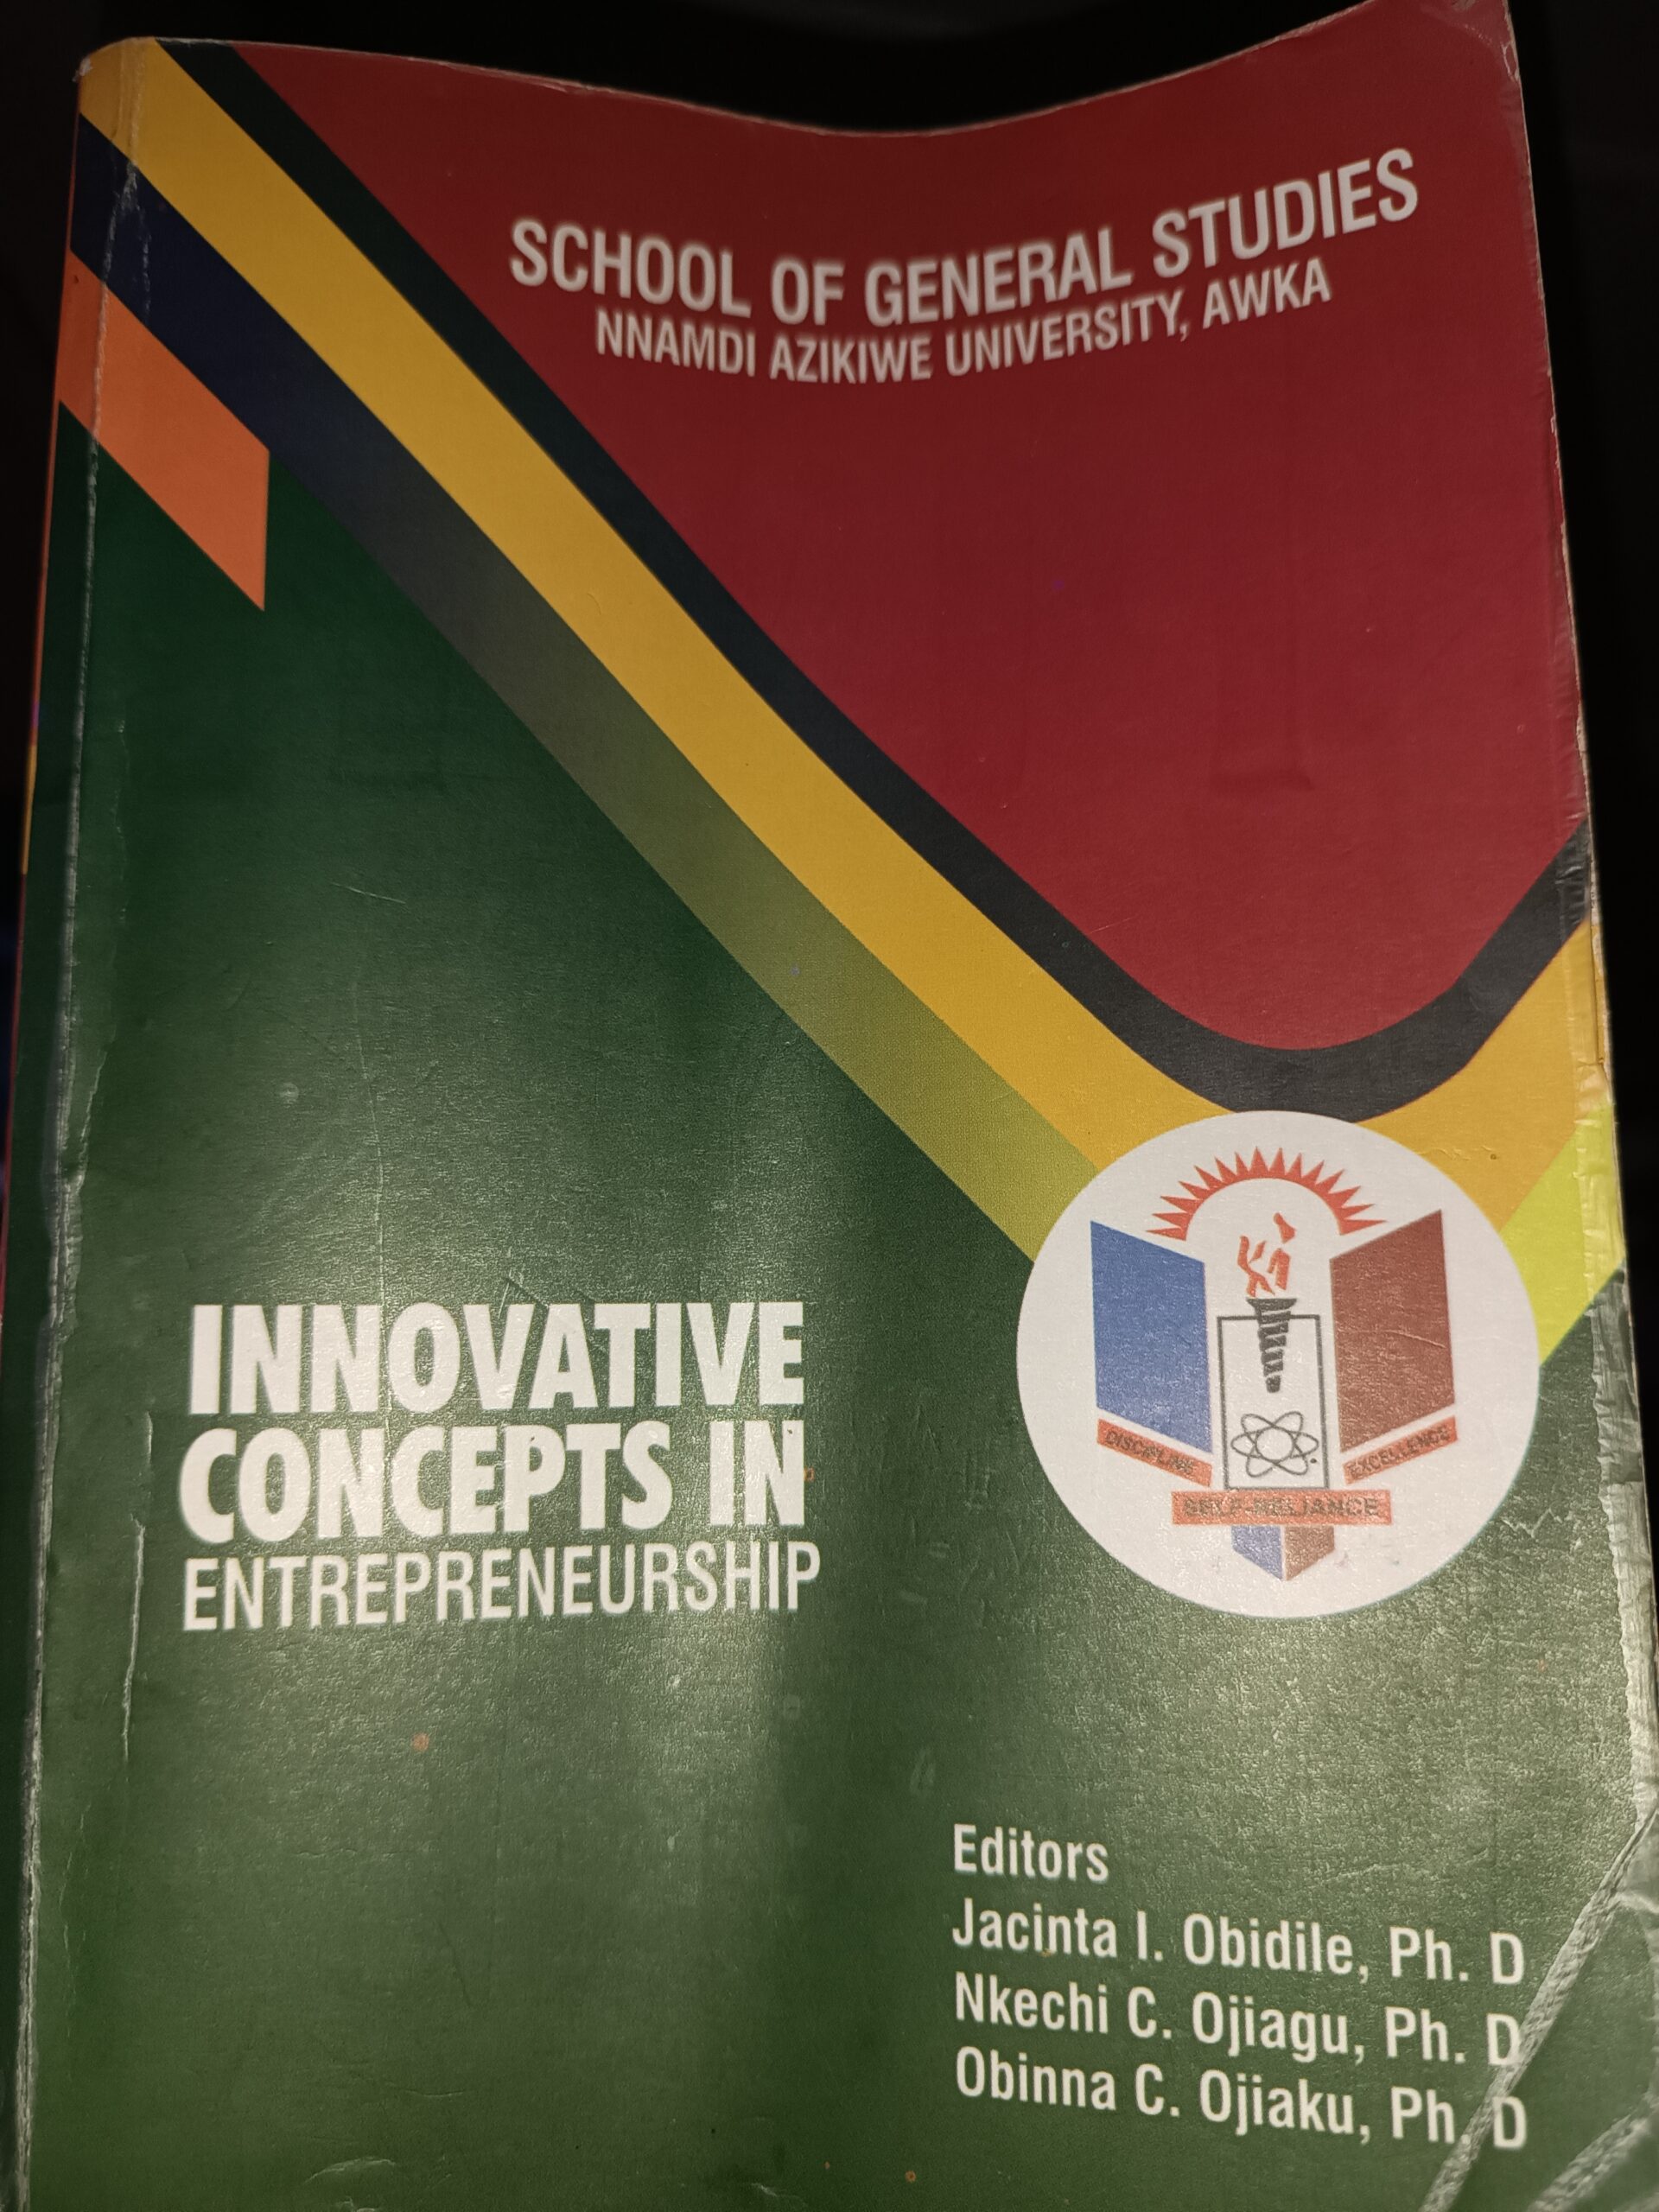 Entrepreneurial Studies for University Students.